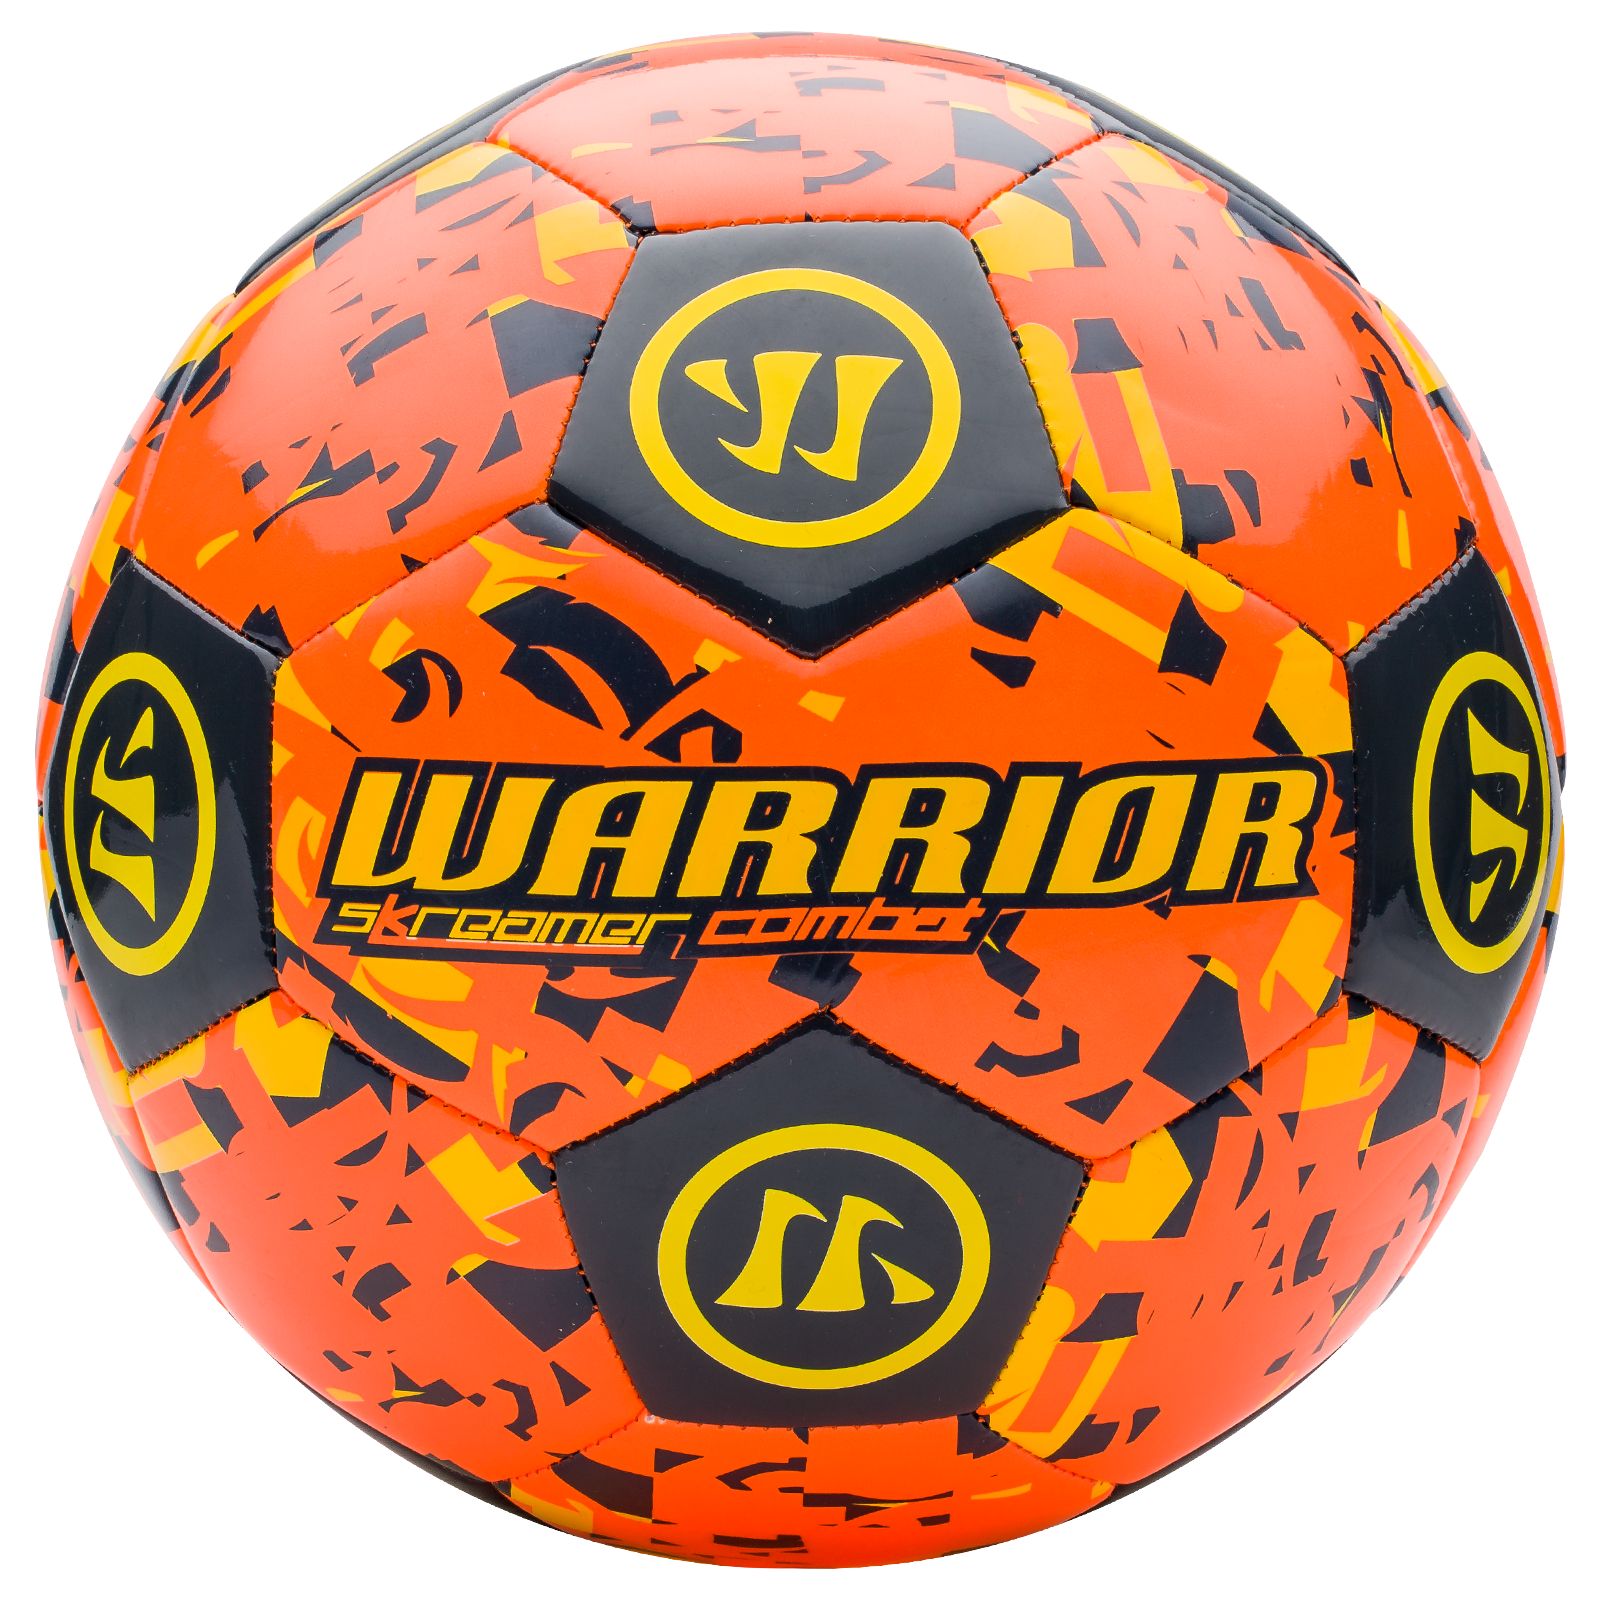 Skreamer Combat Ball, Orange Flash with Ebony & Cyber Yellow image number 0